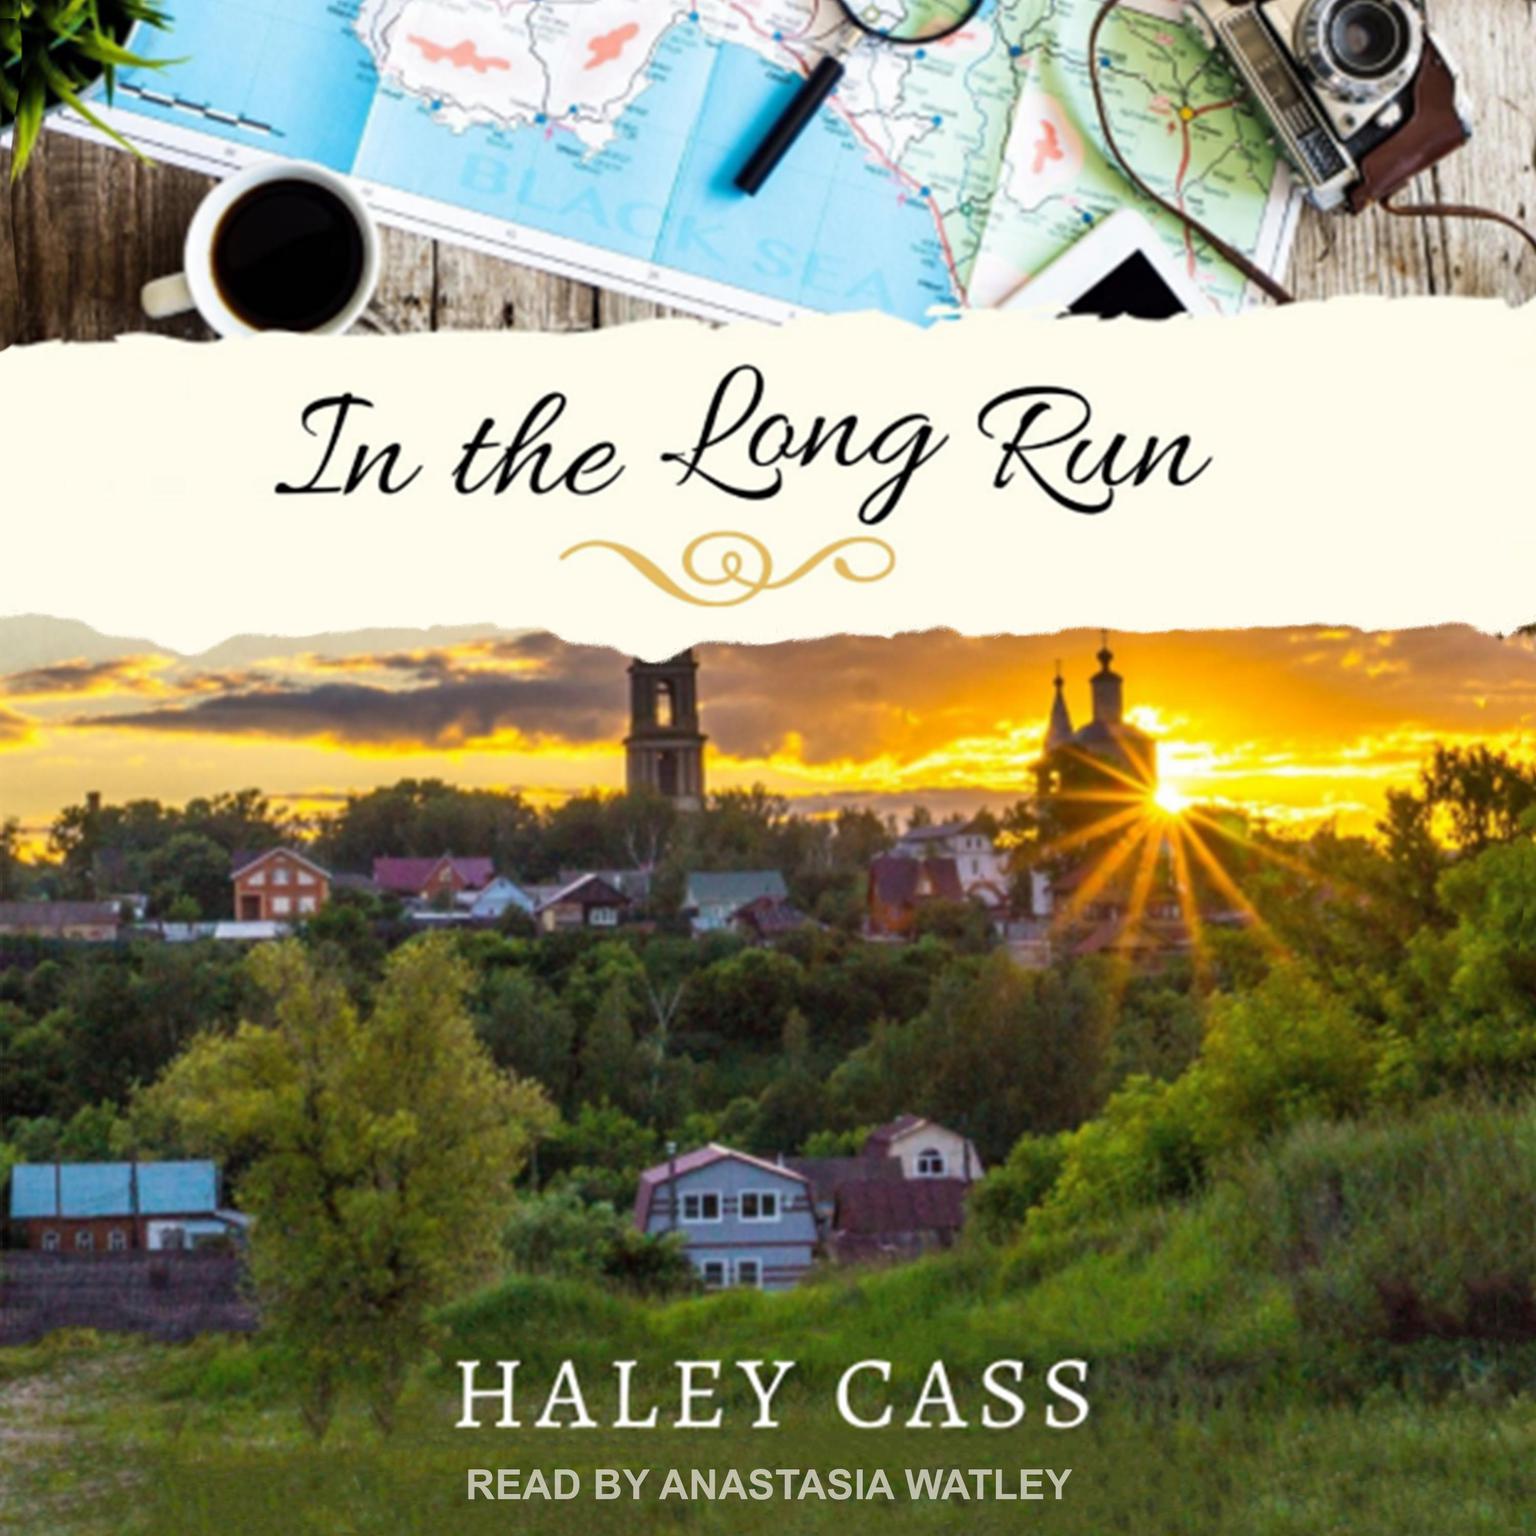 Anastasia Watley, Haley Cass: In the Long Run (AudiobookFormat, 2021, -)